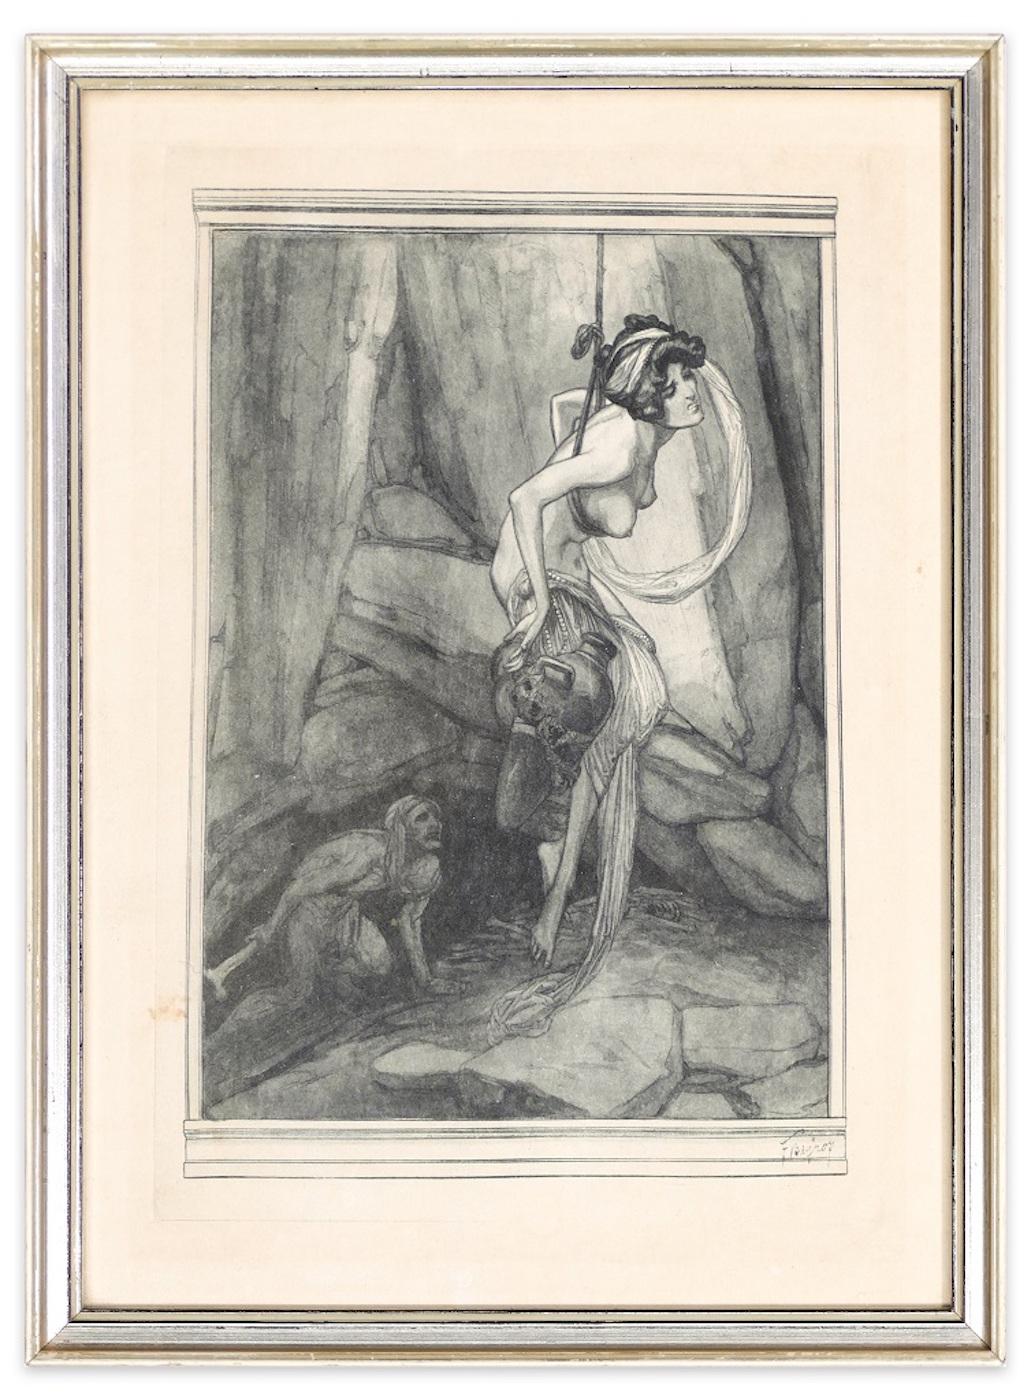 Samaritan Woman in Jacob's Well - Héliogravure by Franz von Bayros - Print by Franz von Bayros (Choisi Le Conin)